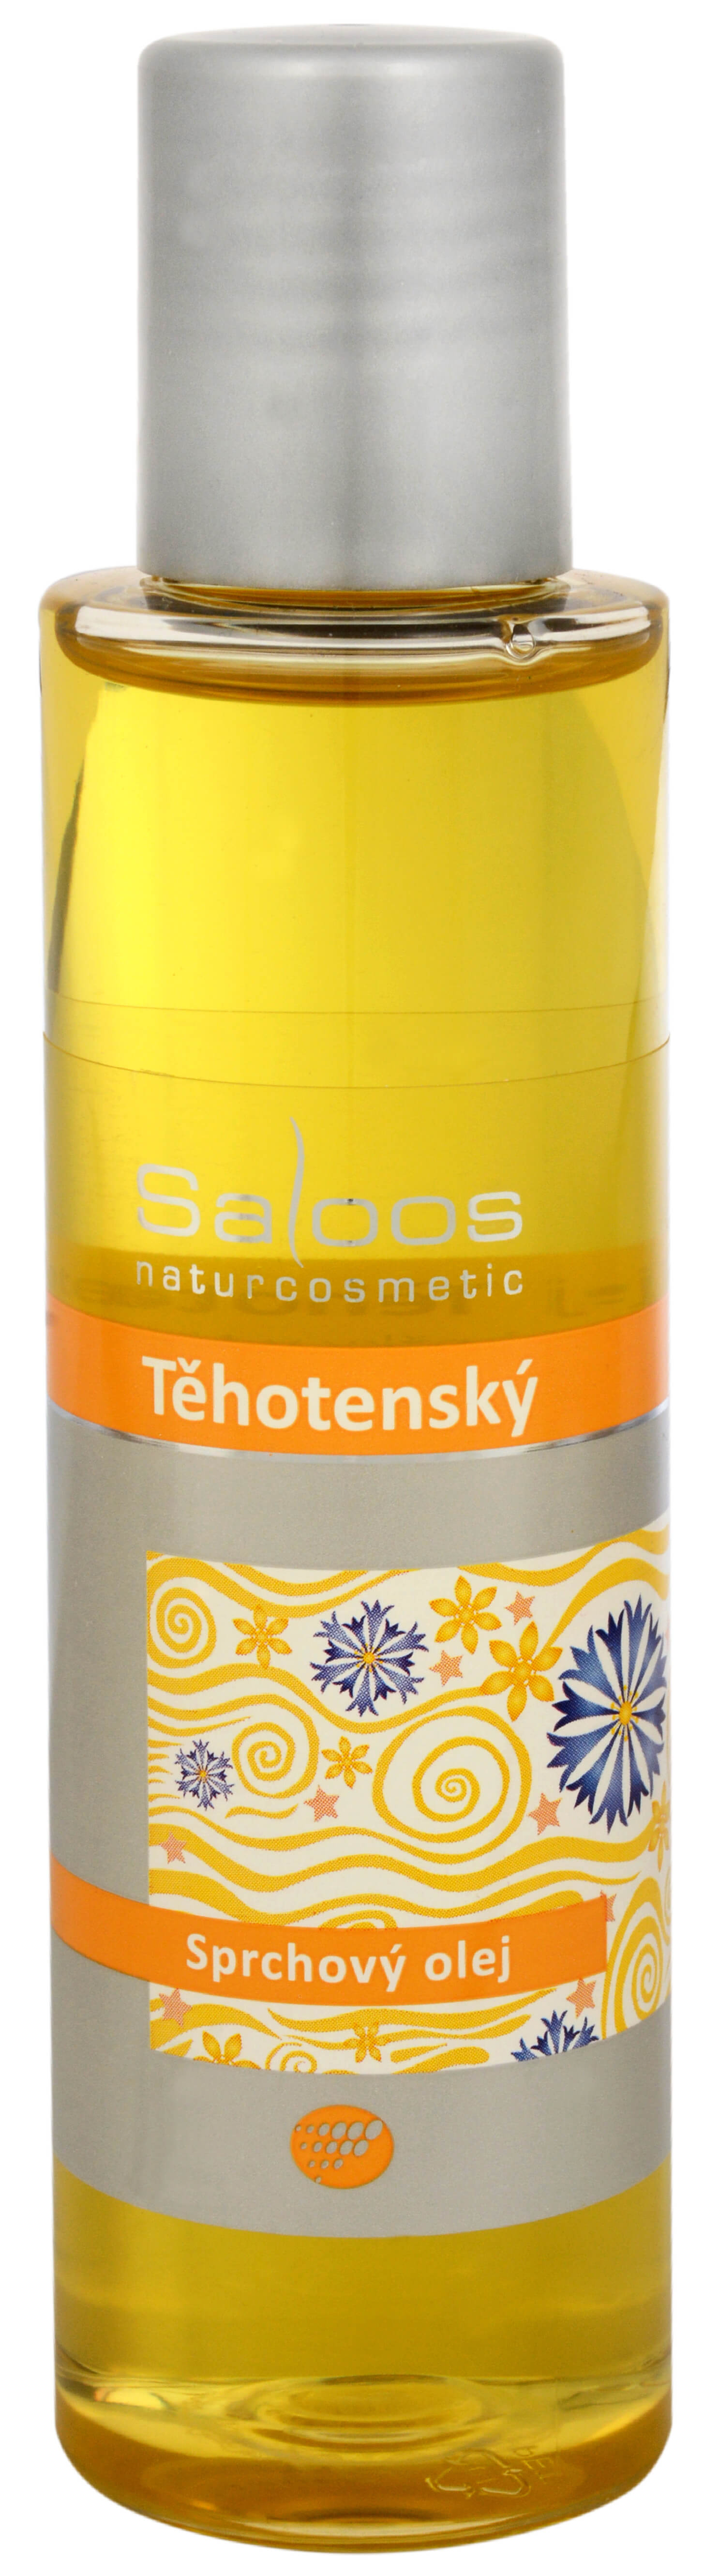 Zobrazit detail výrobku Saloos Sprchový olej - Těhotenský 125 ml